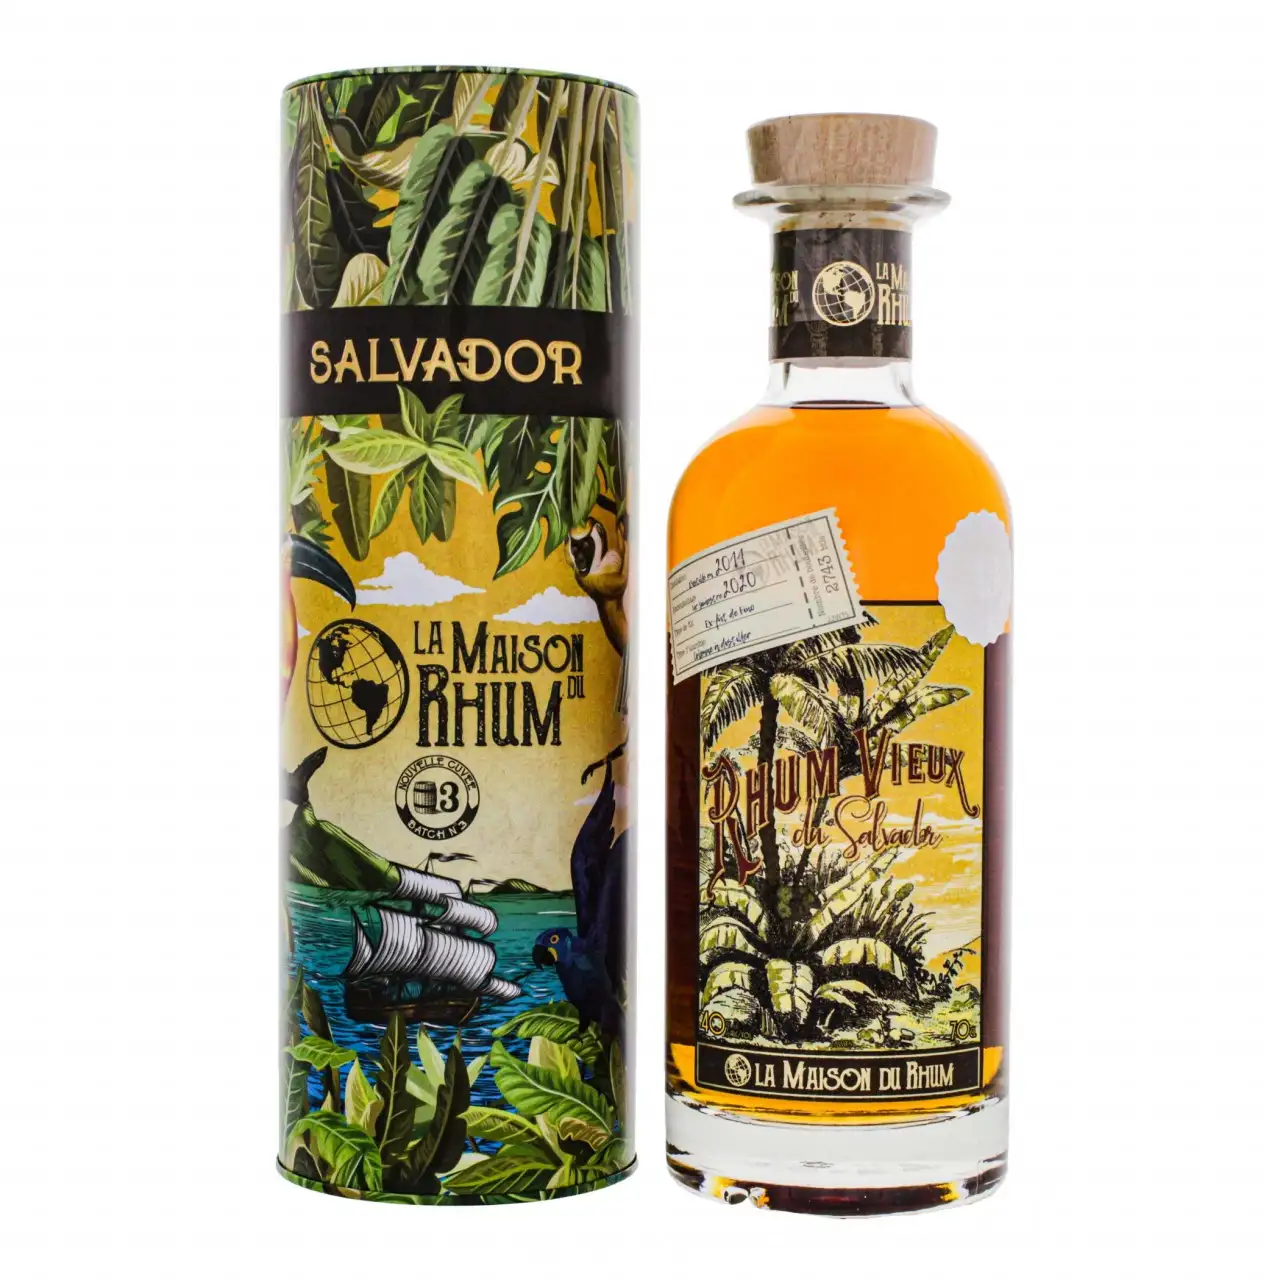 Image of the front of the bottle of the rum La Maison du Rhum Salvador